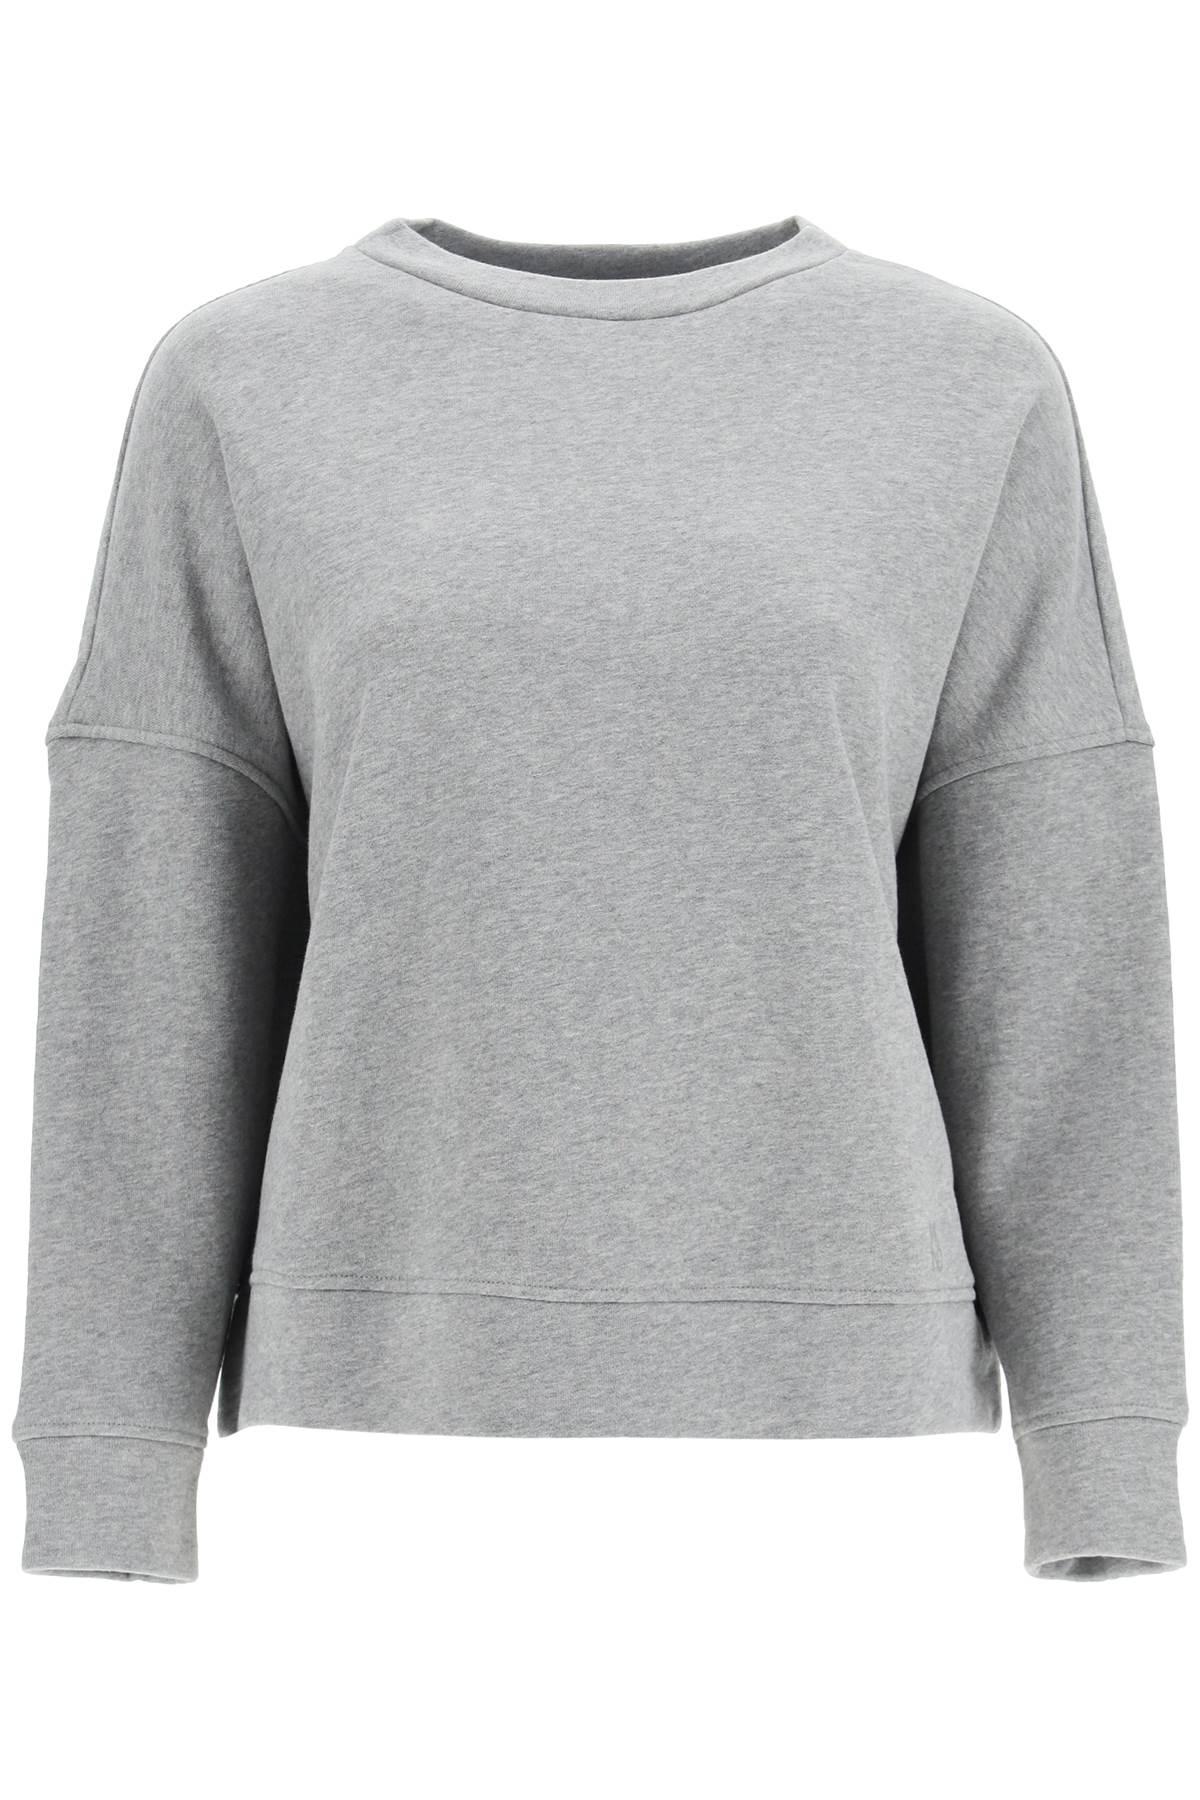 Weekend by Maxmara 'prisma' Boxy Sweatshirt in Gray | Lyst